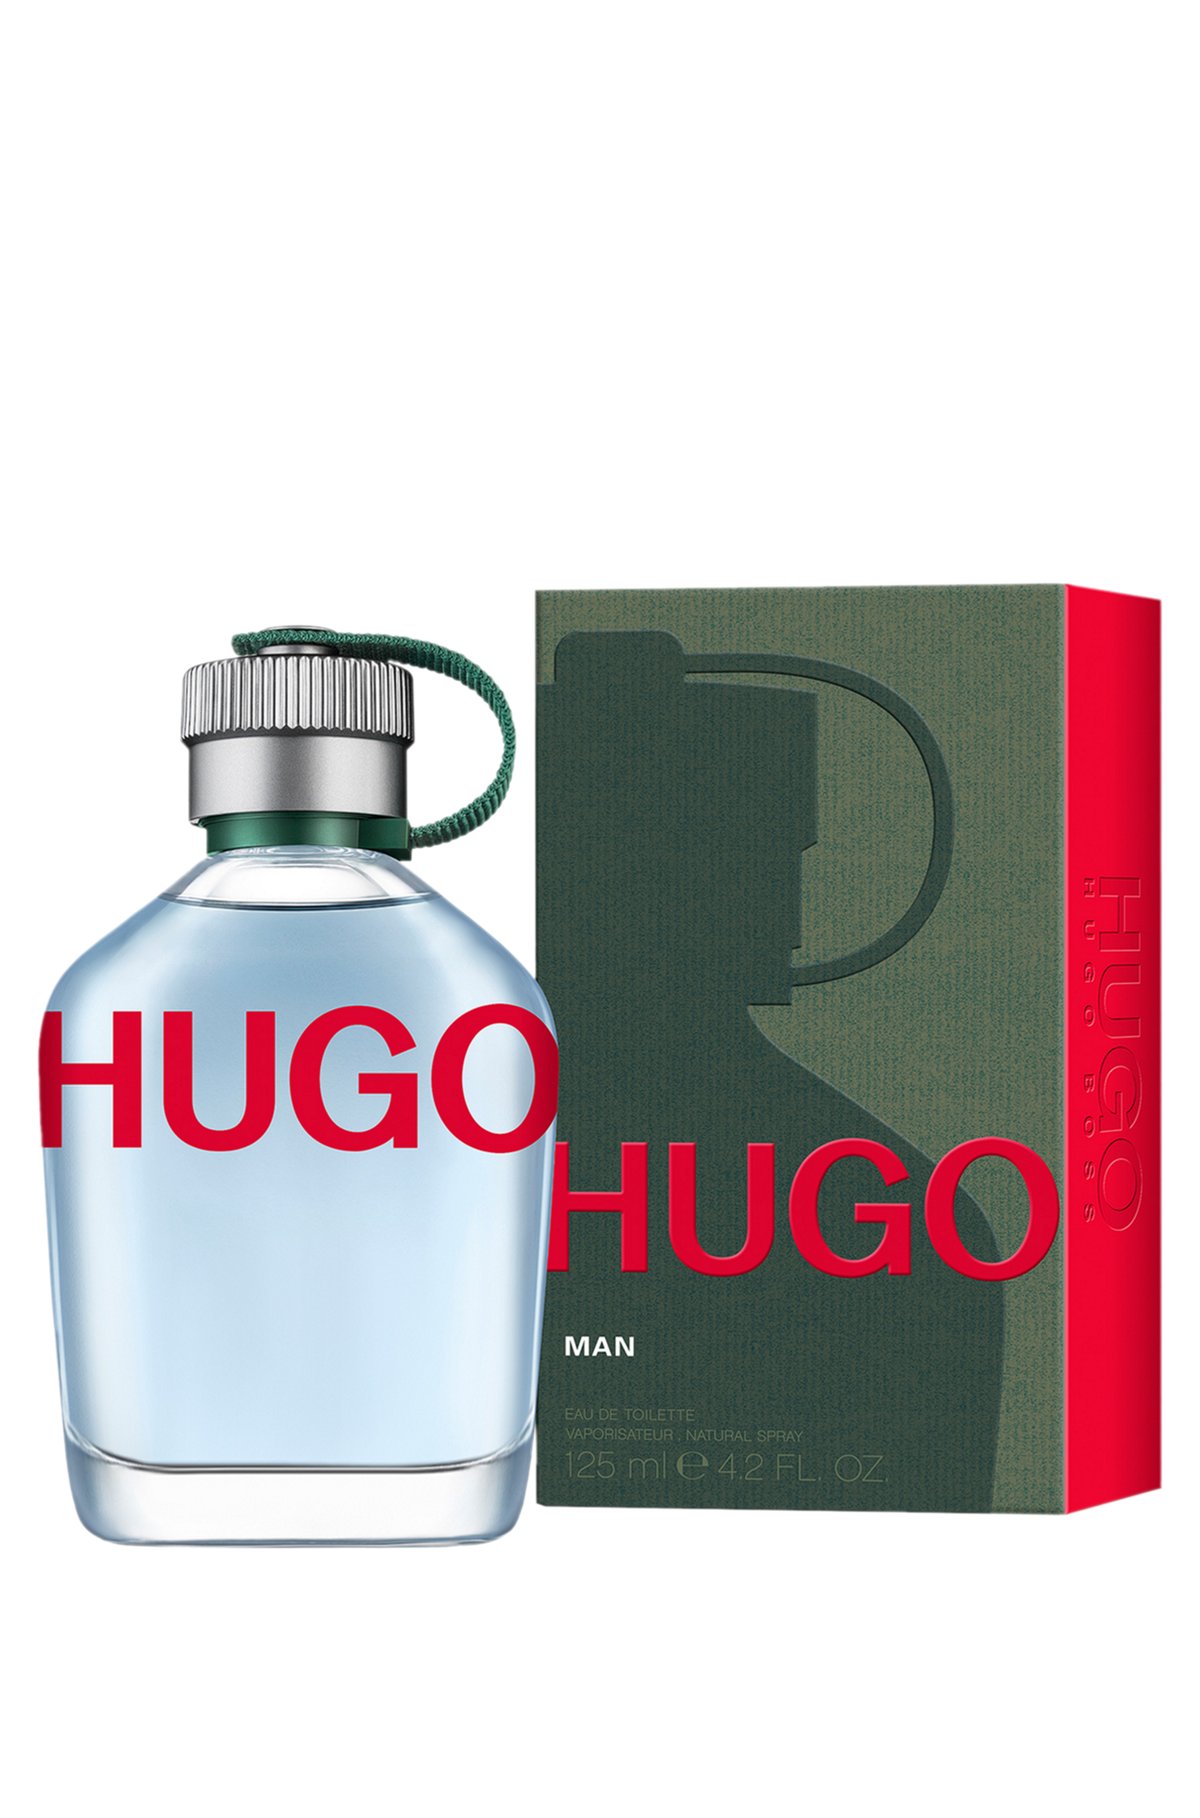 HUGO Man eau de toilette 125 ml, Assorted-Pre-Pack